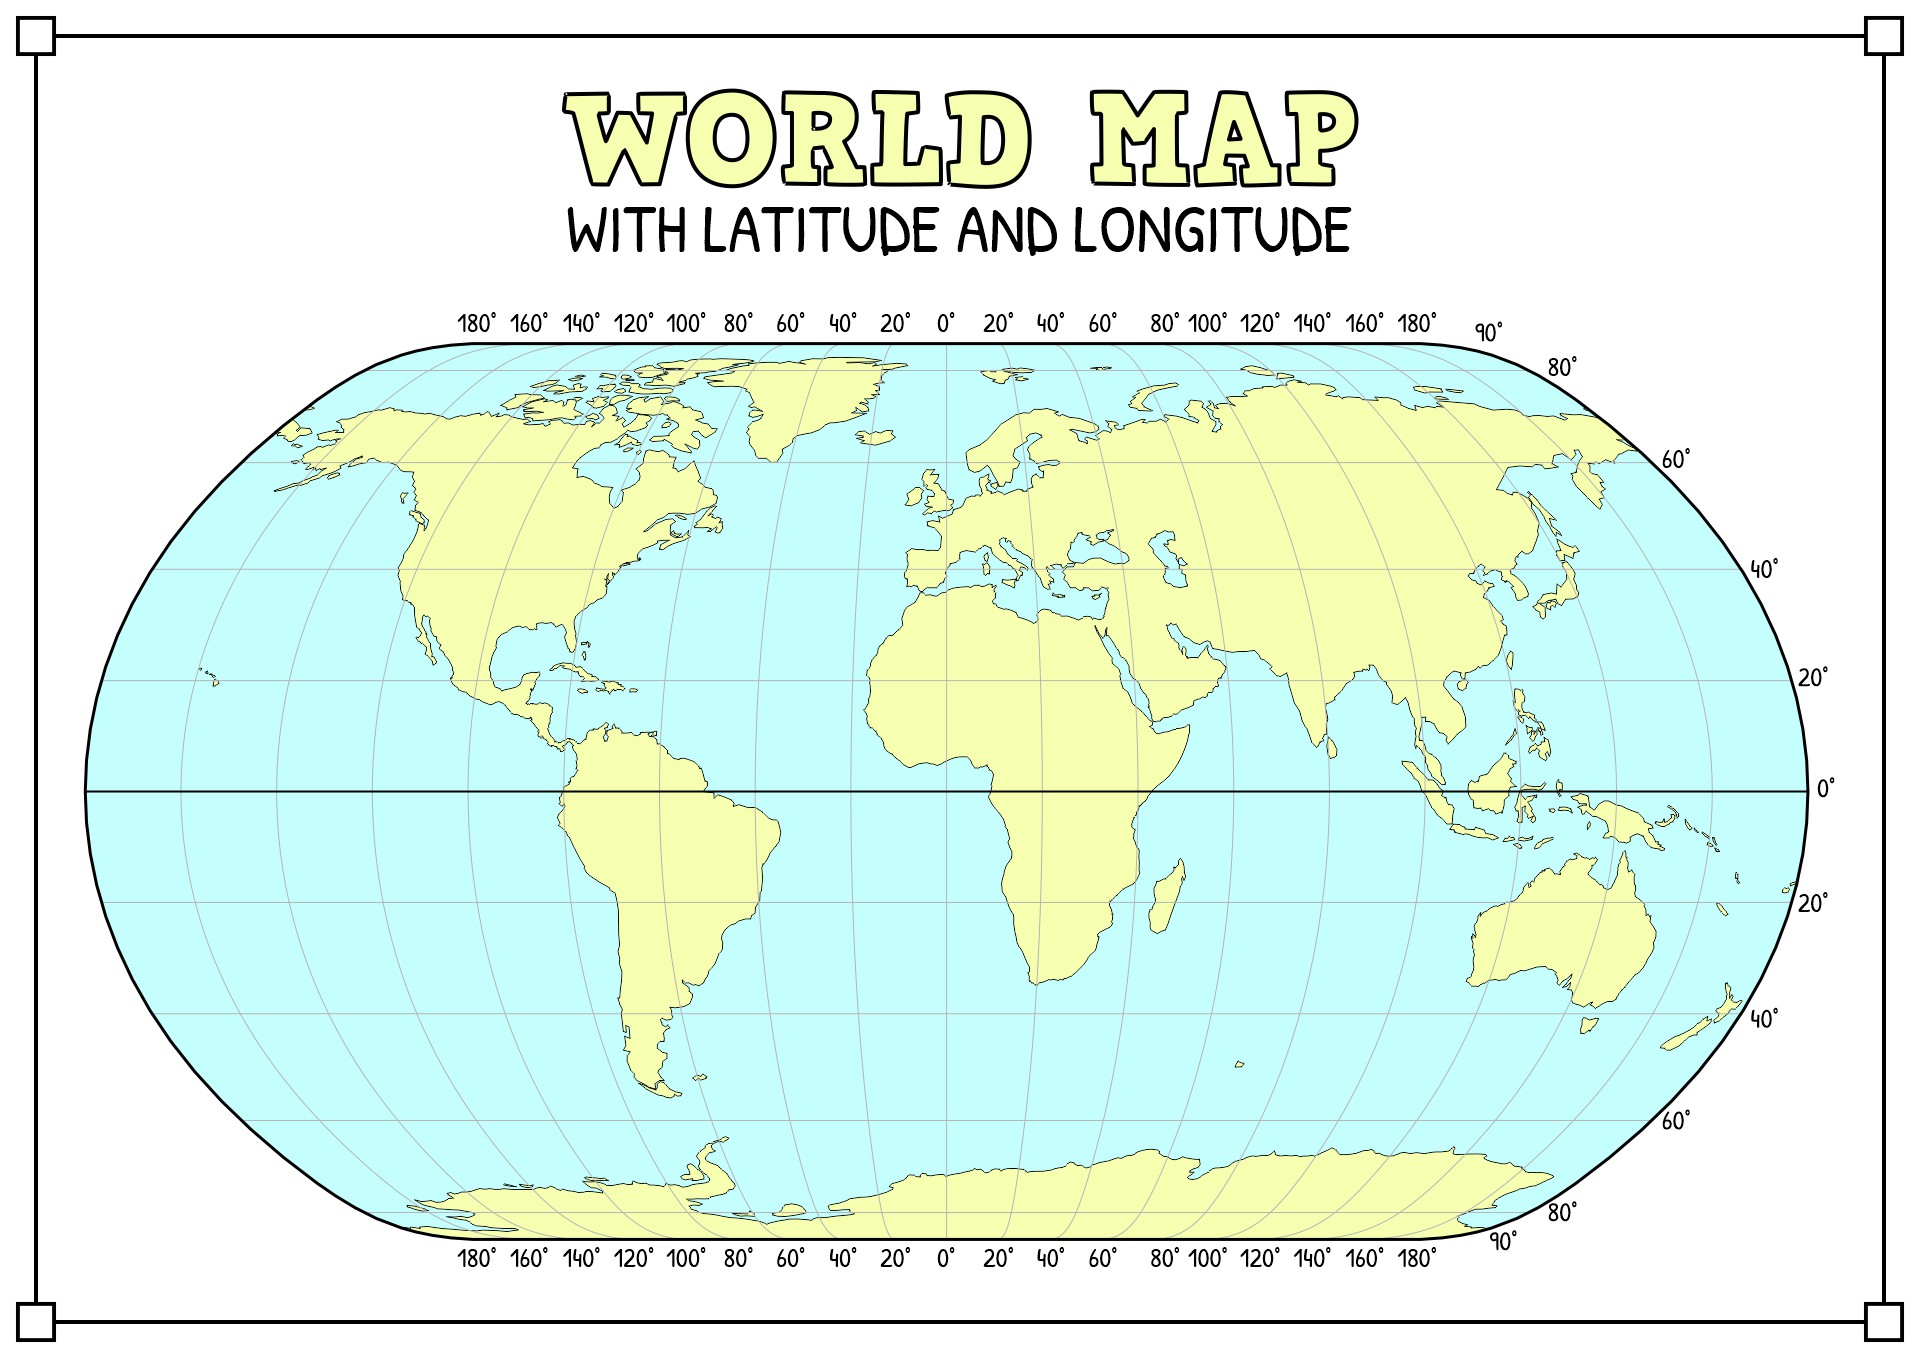 14-best-images-of-label-latitude-longitude-lines-worksheet-longitude-and-latitude-worksheets